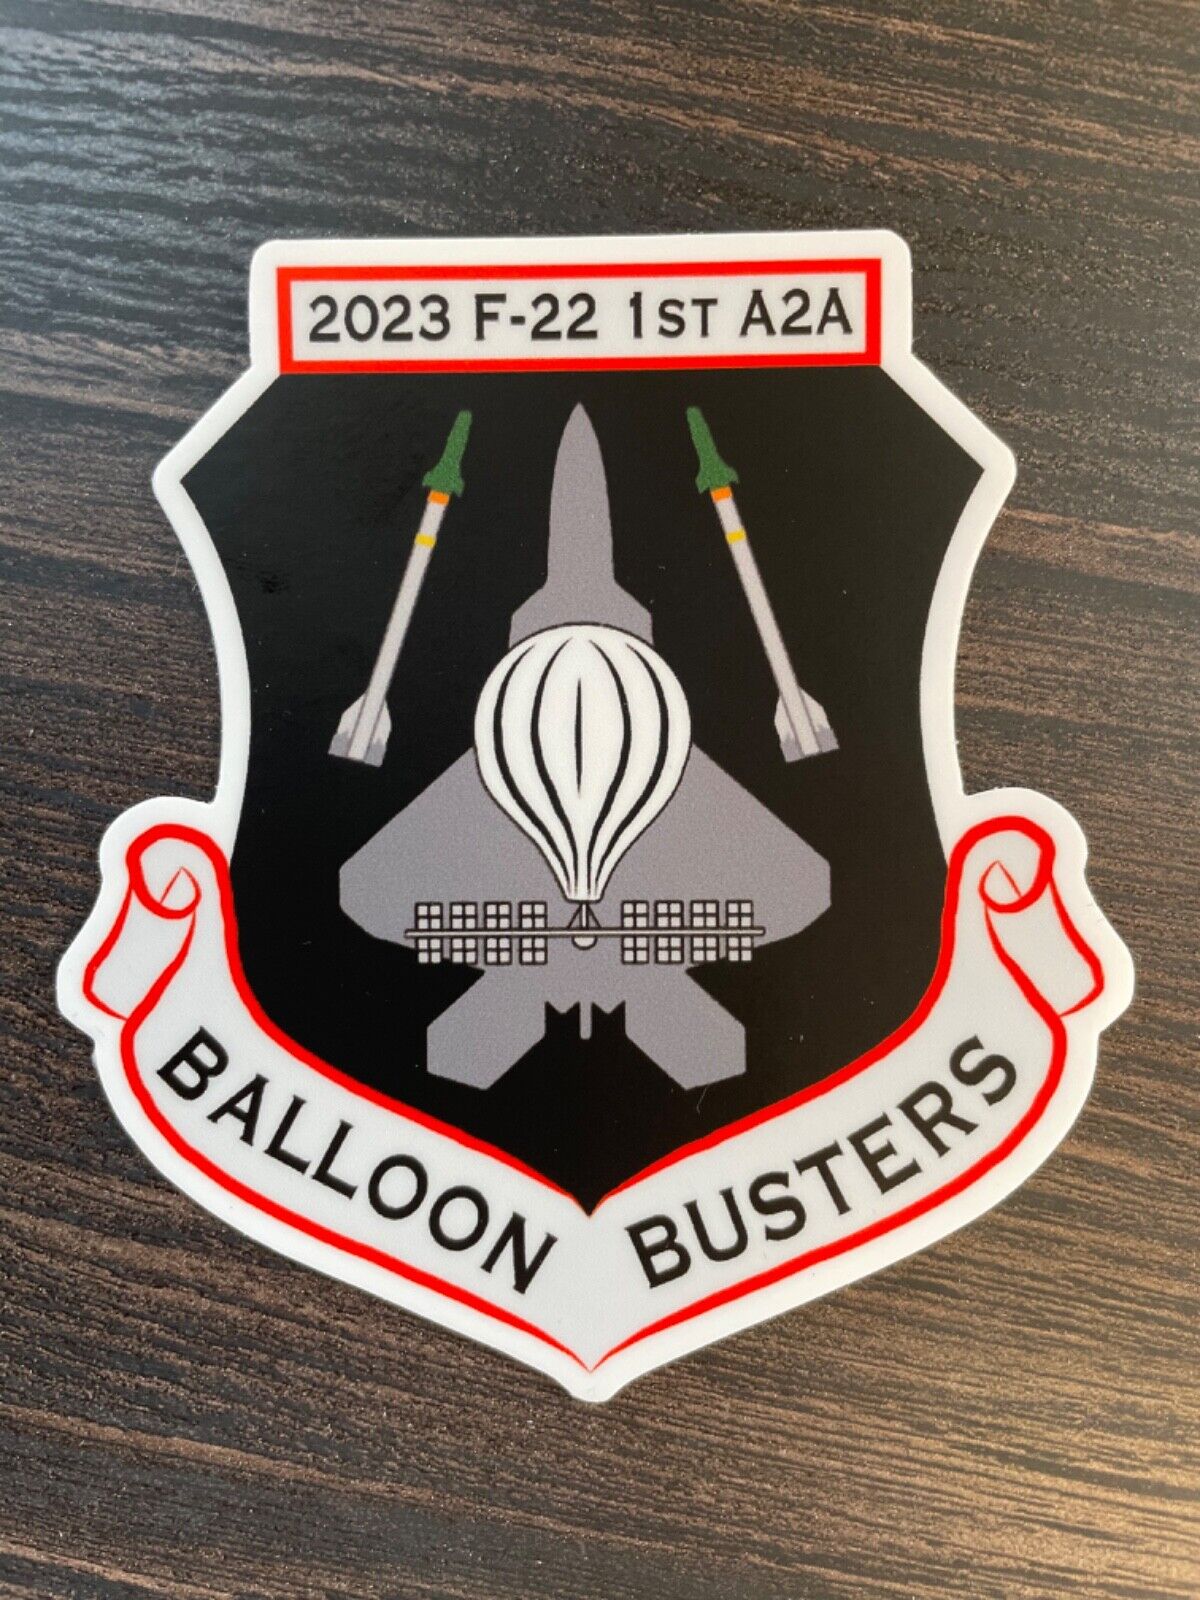 F-22 Raptor “Balloon Busters” Mission Patch Vinyl Sticker by Diamondback Designs